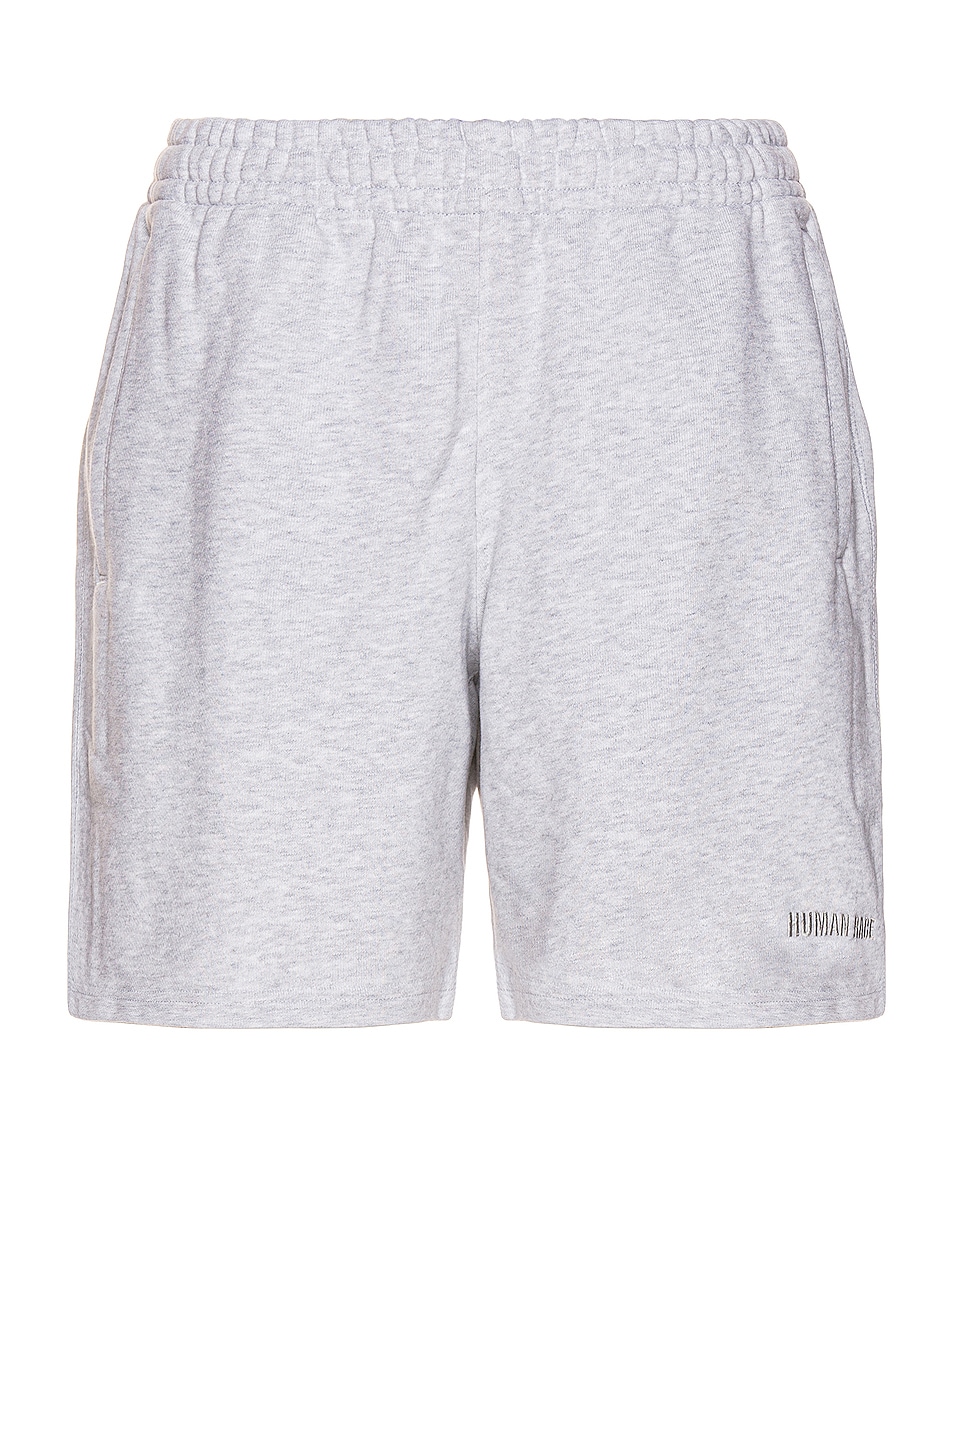 Image 1 of adidas x Pharrell Williams Basics Short in Light Grey Heather